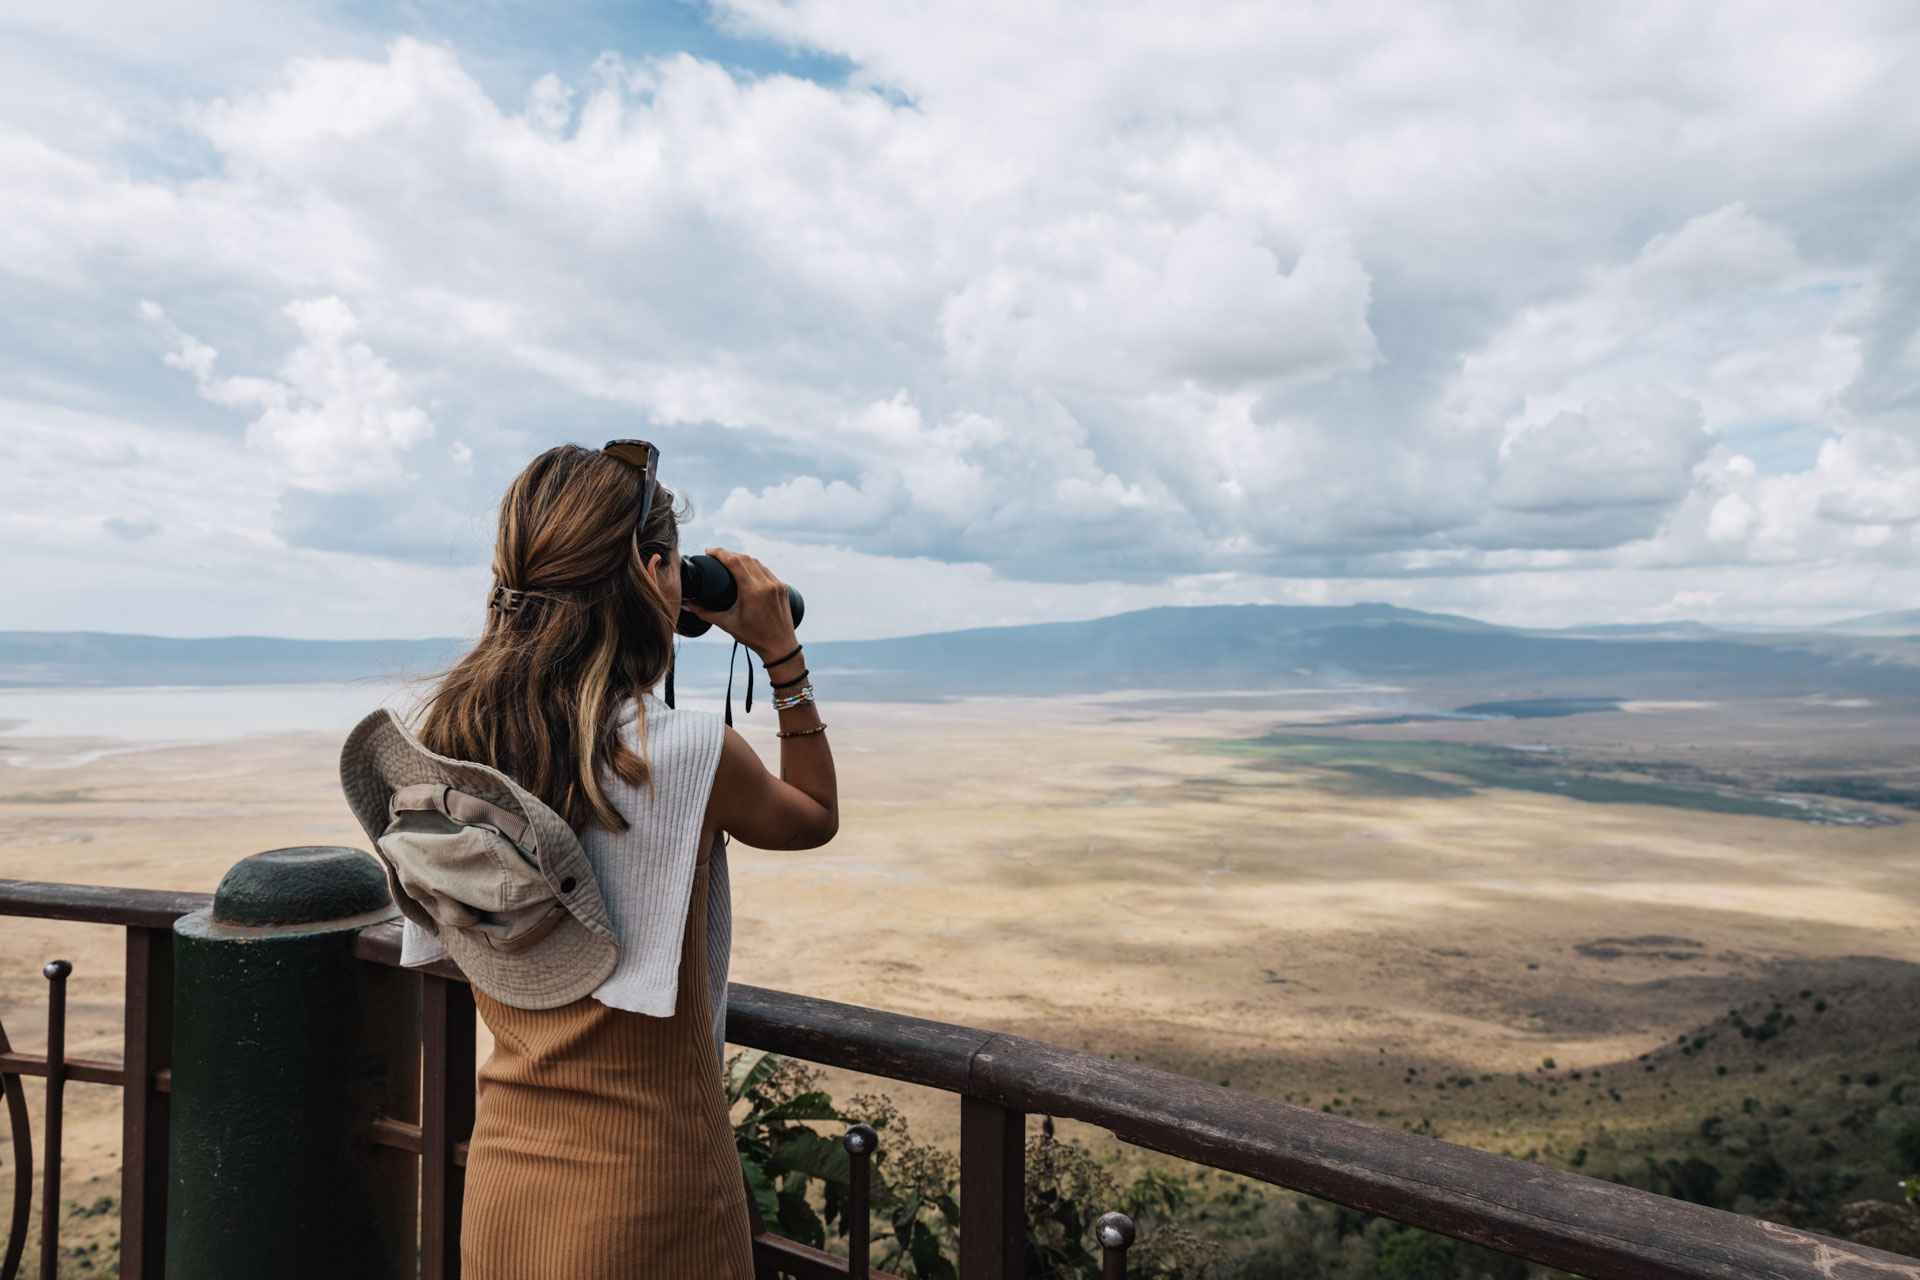 ngorongoro safari, safari ngorongoro, safari in ngorongoro crater, Ngorongoro Conservation Area, ngorongoro crater, ngorongoro tanzania